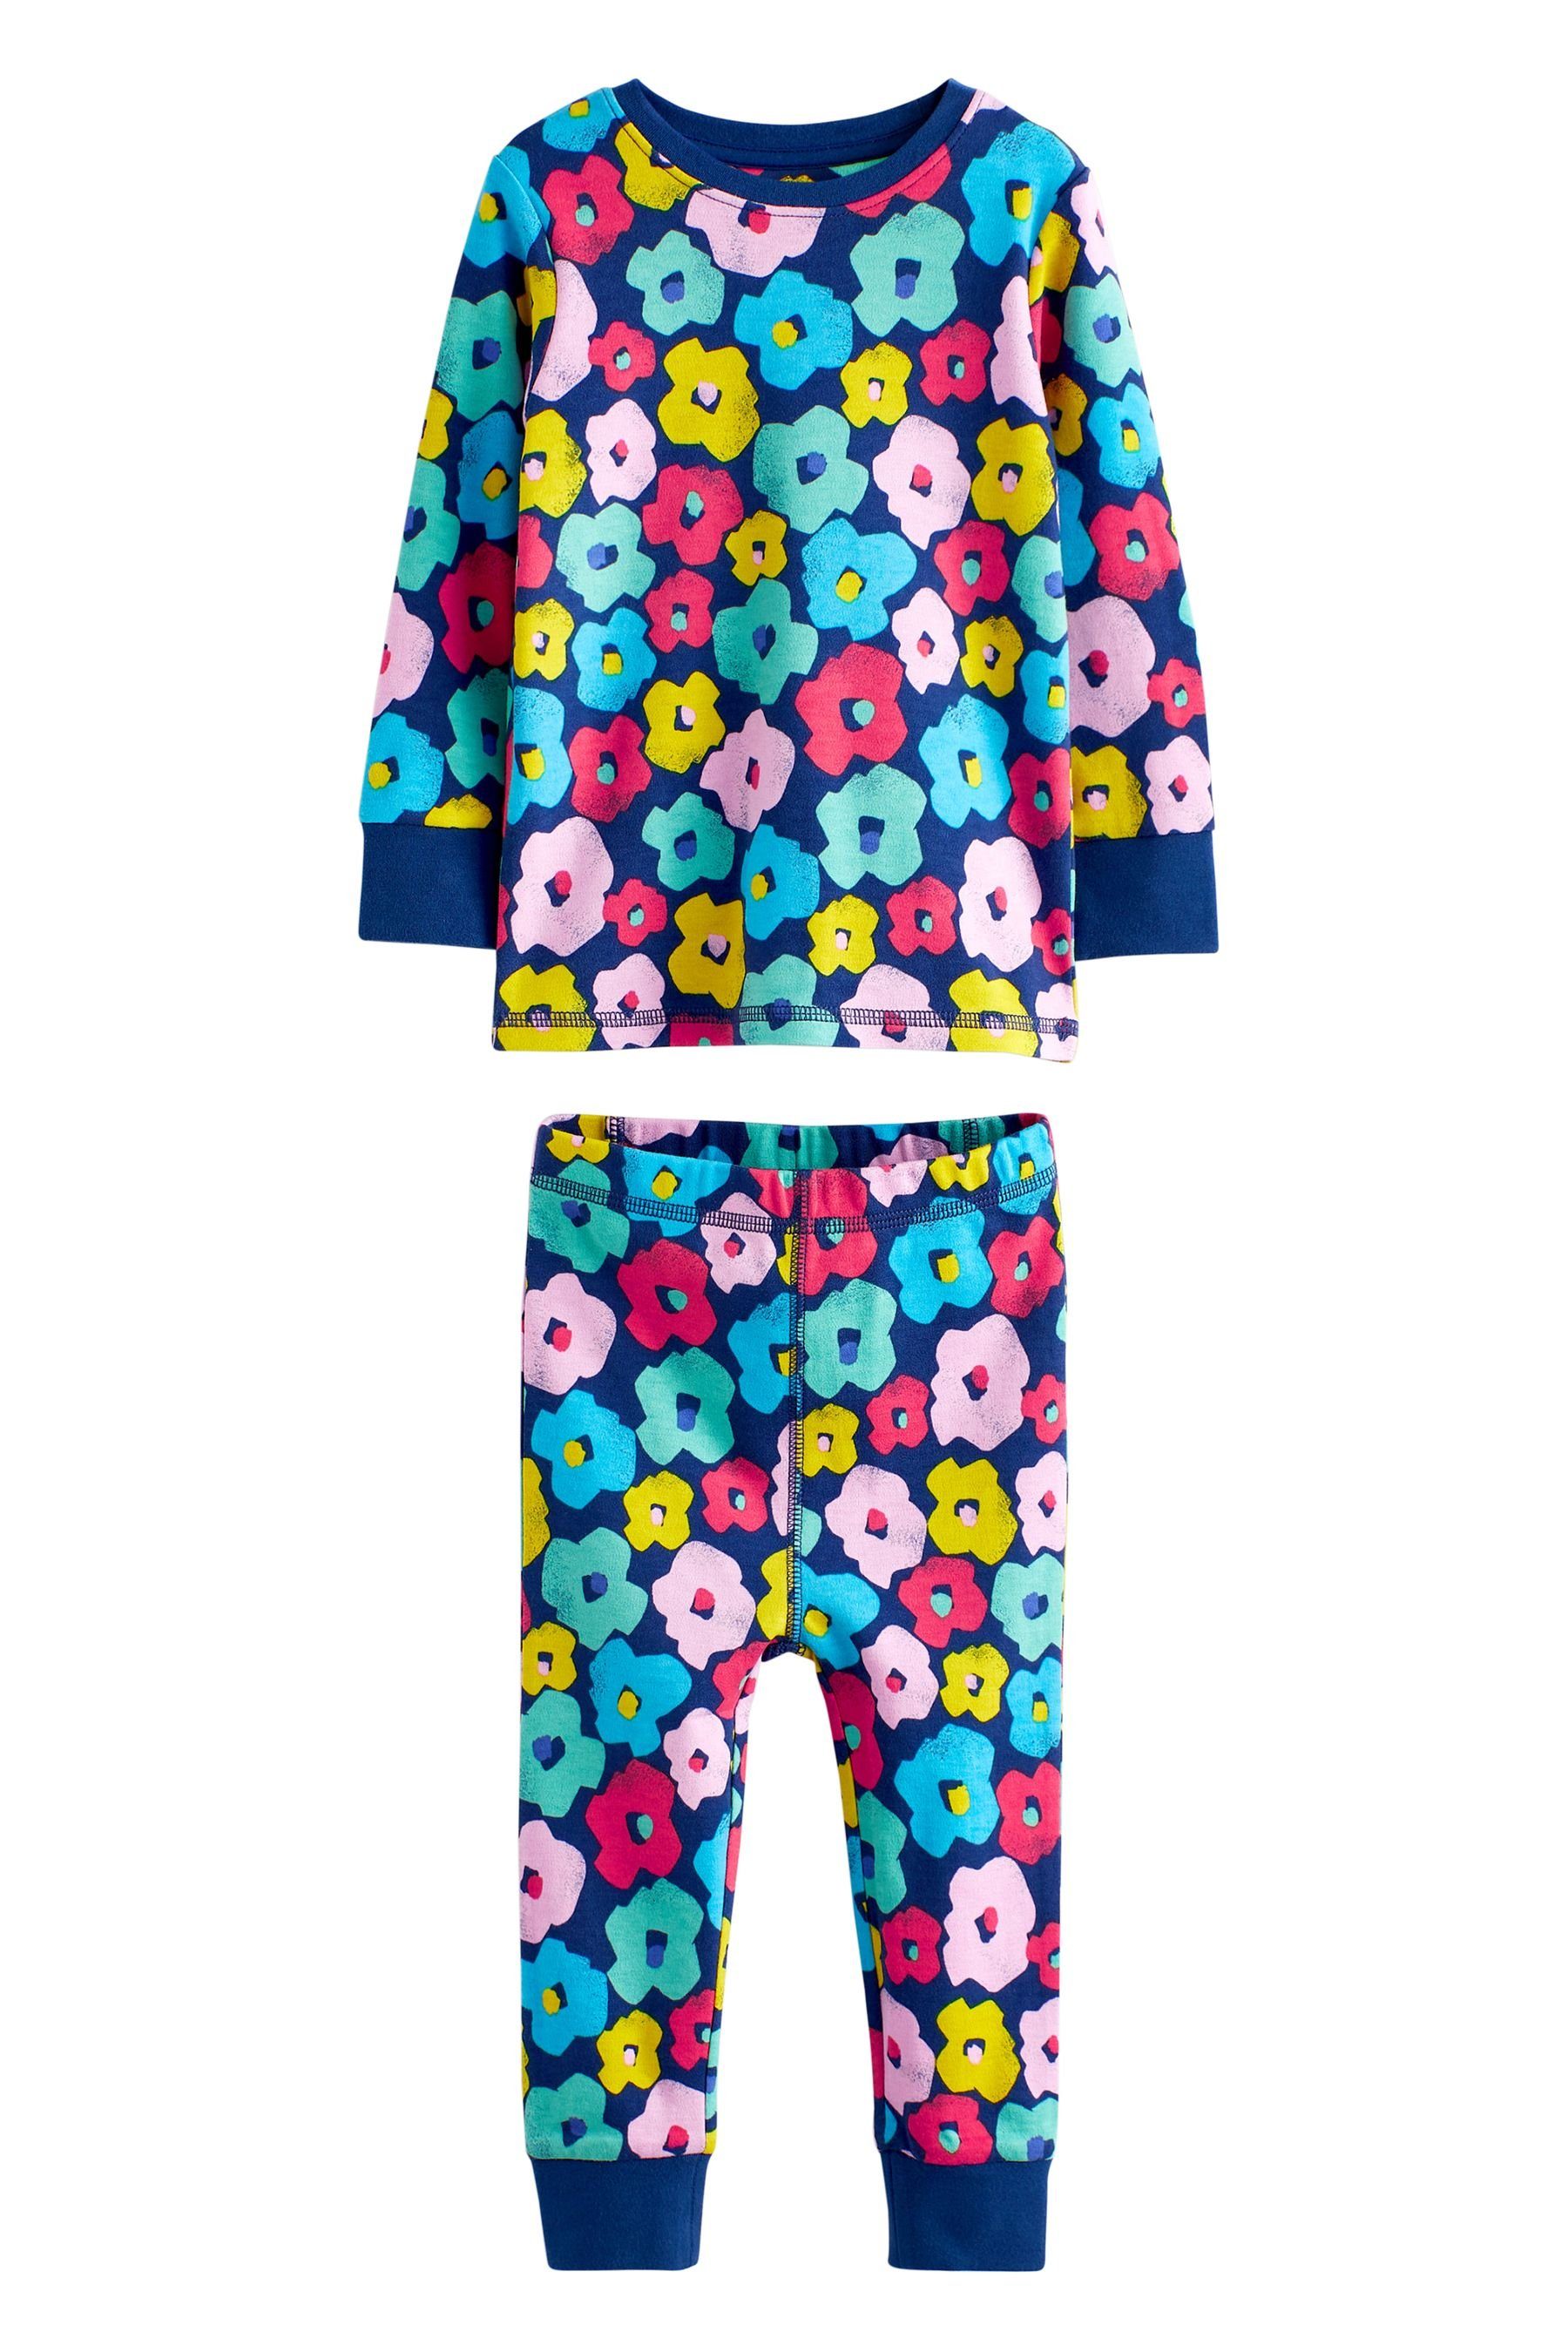 Next Pyjama Kuschelige Pyjamas mit tlg) Figurenmotiv, Multi Character (6 Floral Bright 3er-Pack